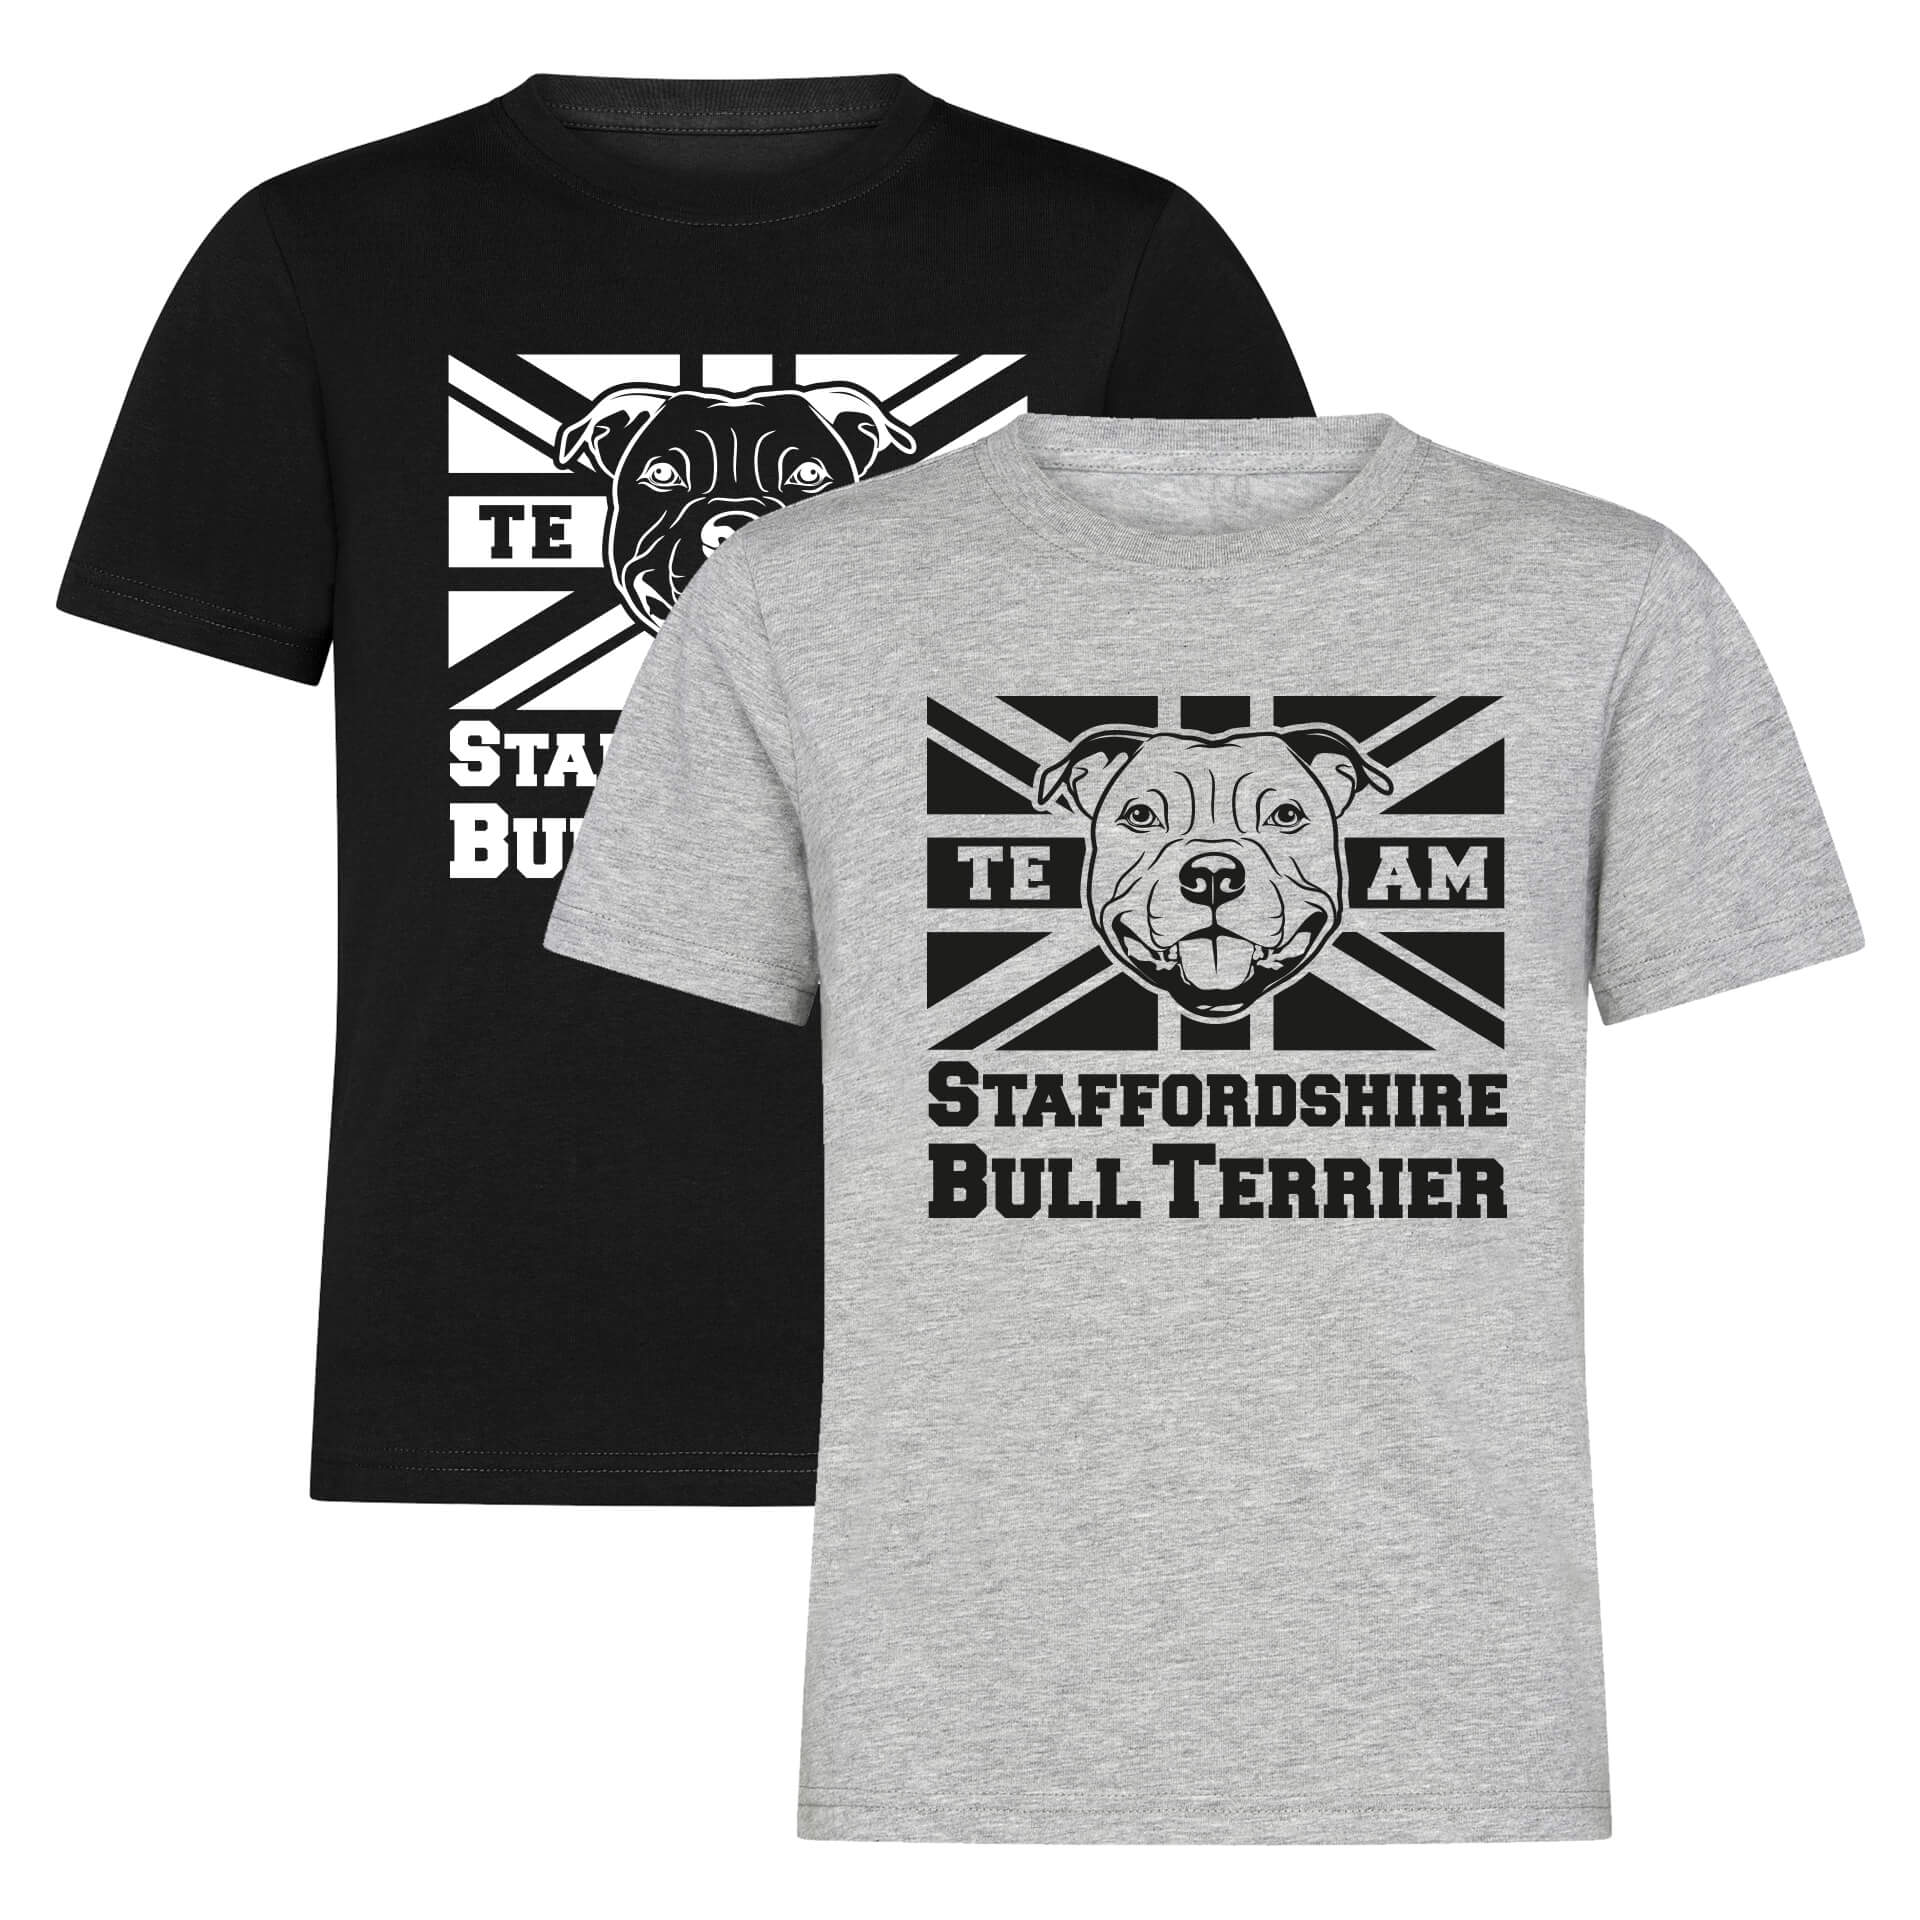 Staffordshire Bullterrier T-Shirt Team